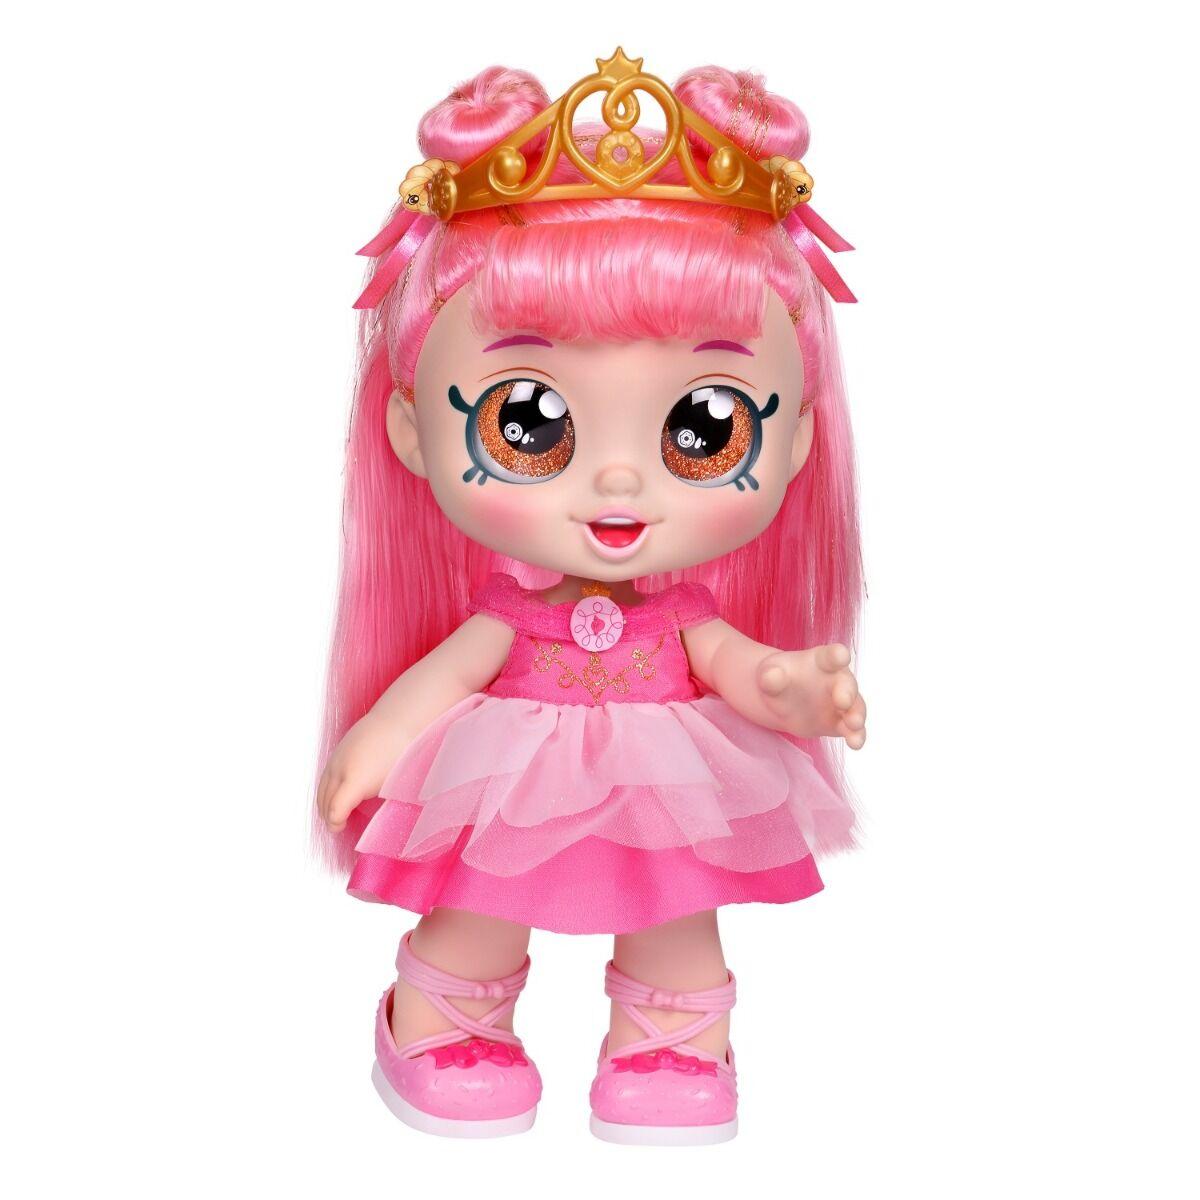 Kindi Kids: Кинди Кидс Игровой набор Кукла Донатина Принцесса с акс.